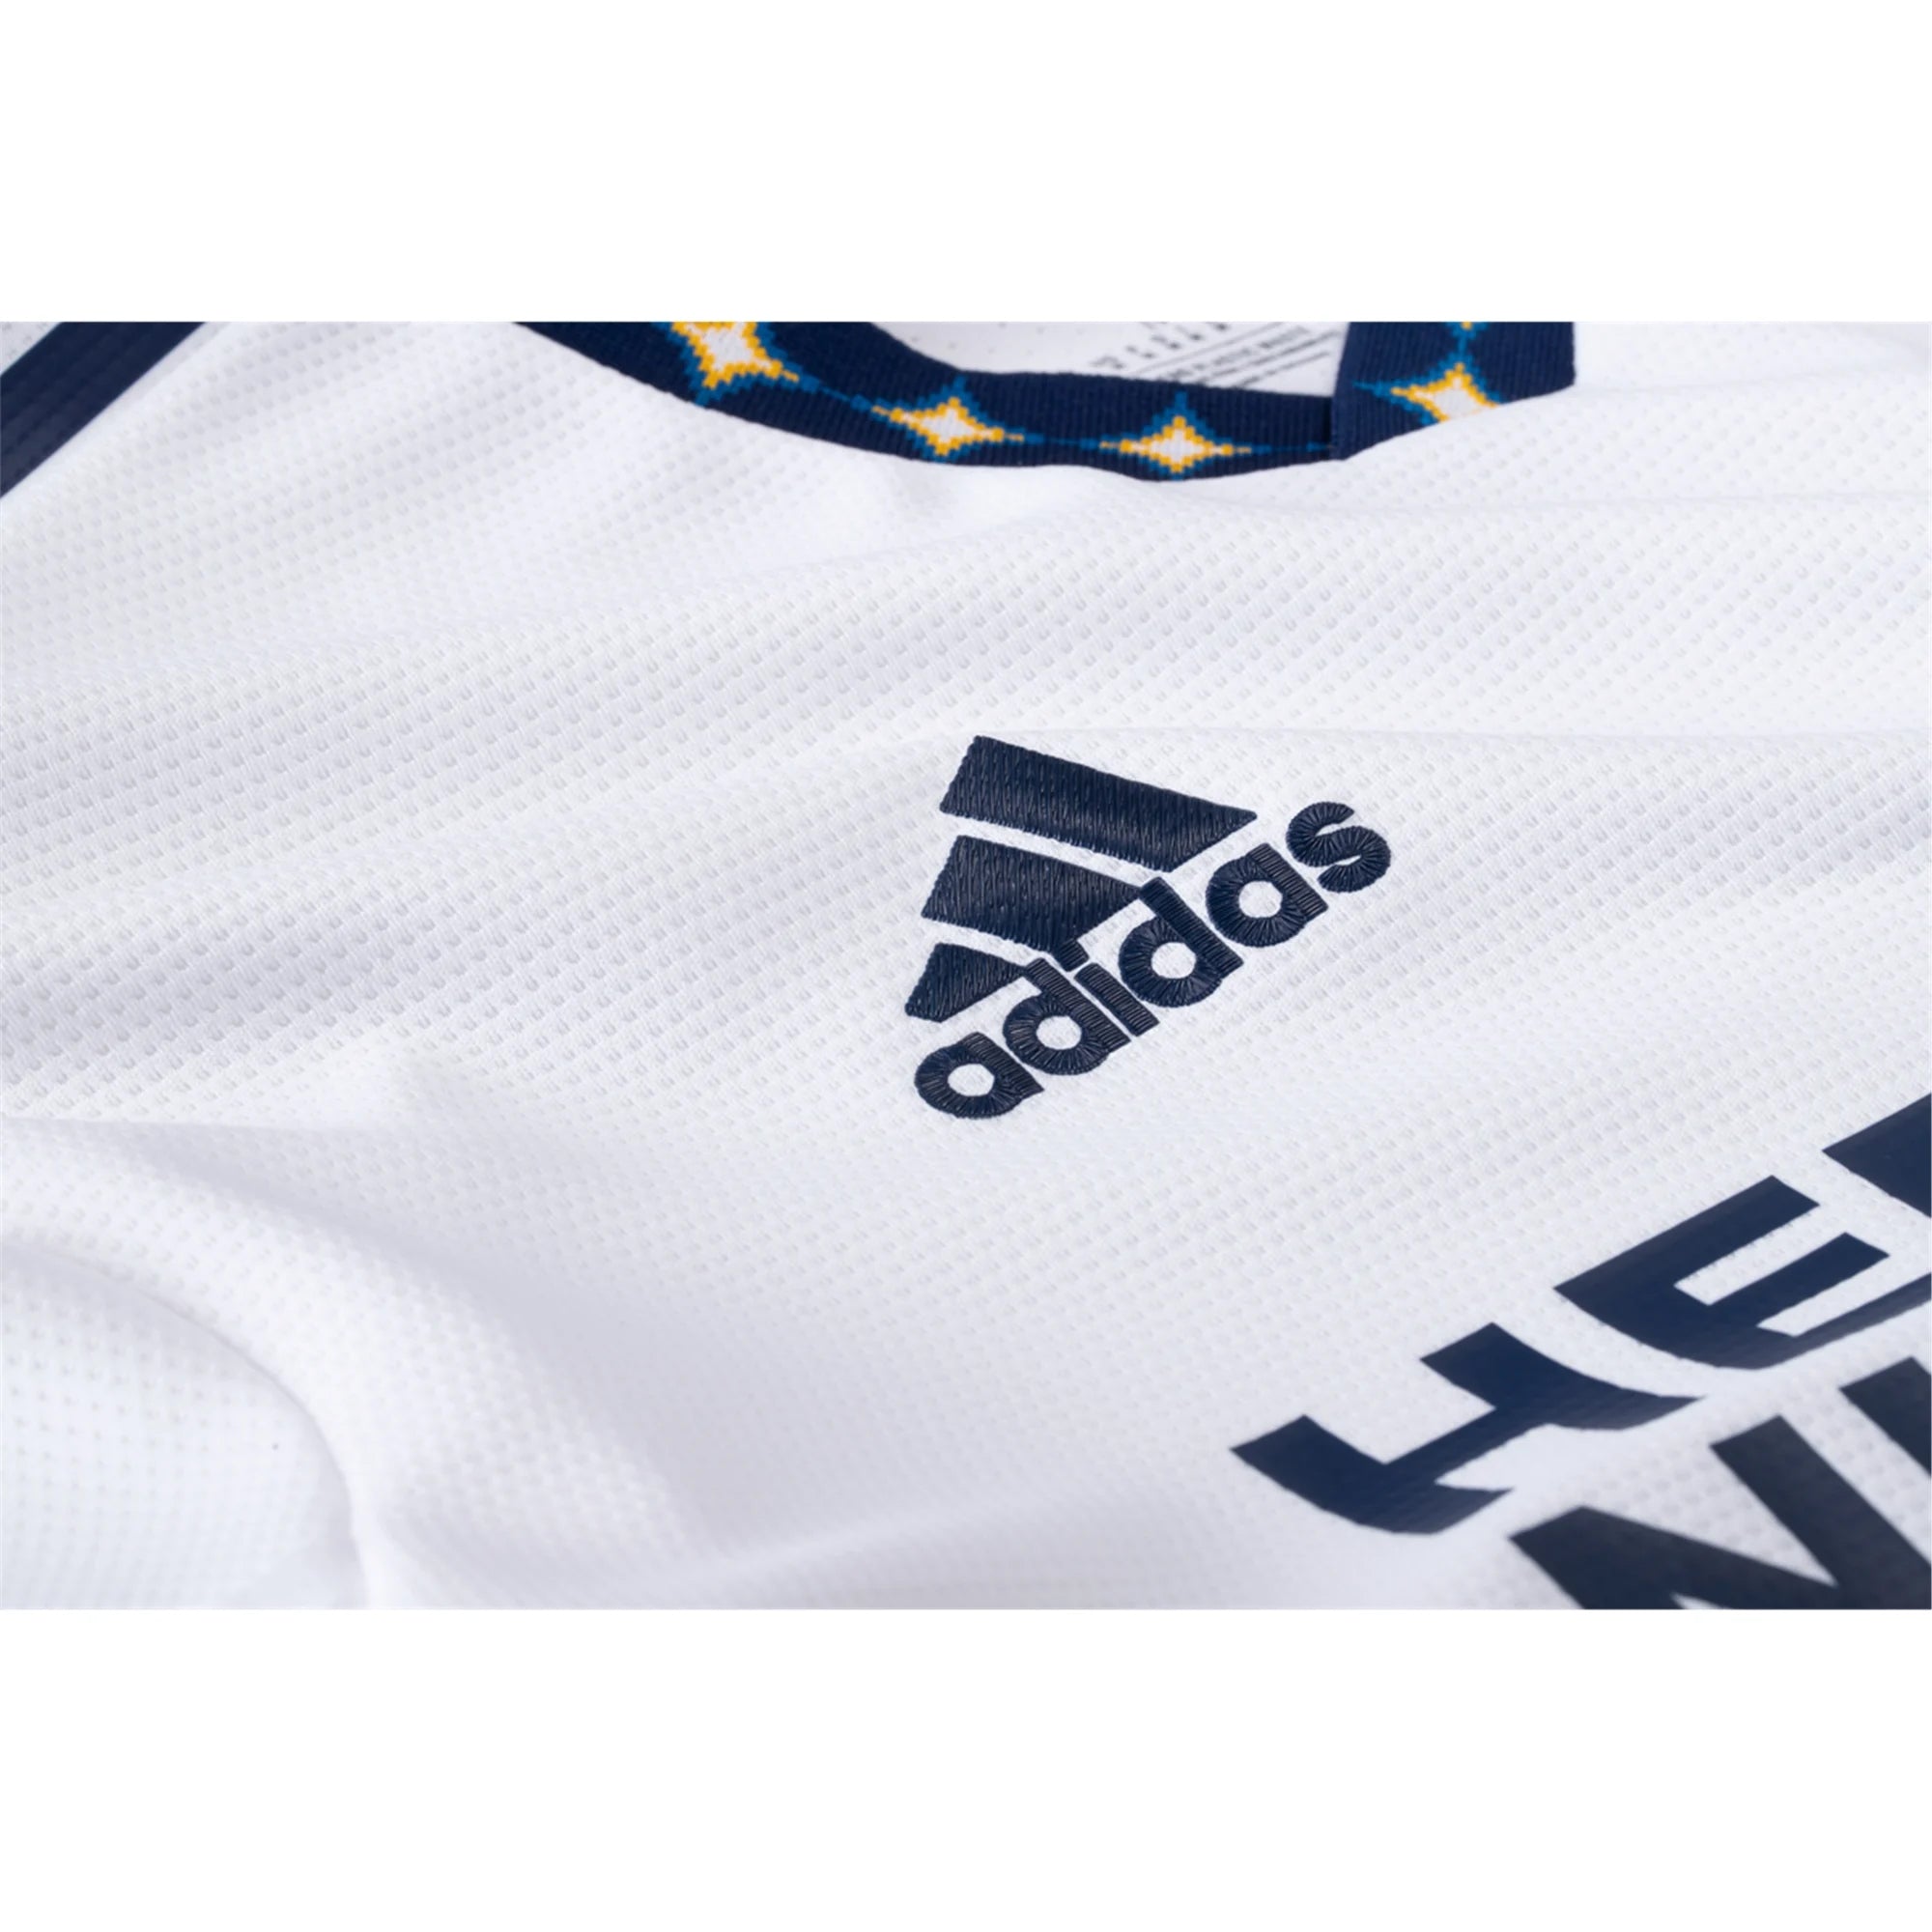 Adidas La Galaxy Away Authentic Jersey 2021/22 M